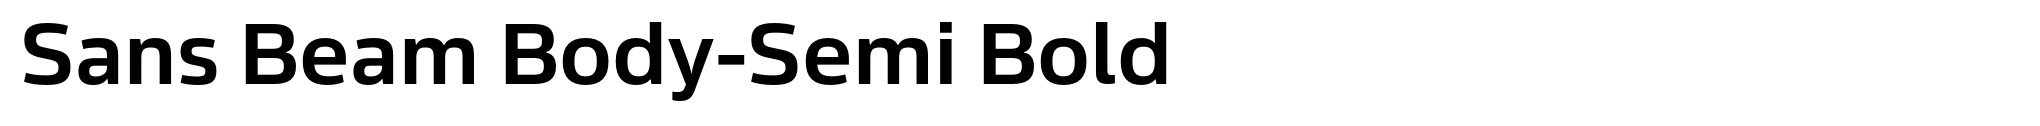 Sans Beam Body-Semi Bold image